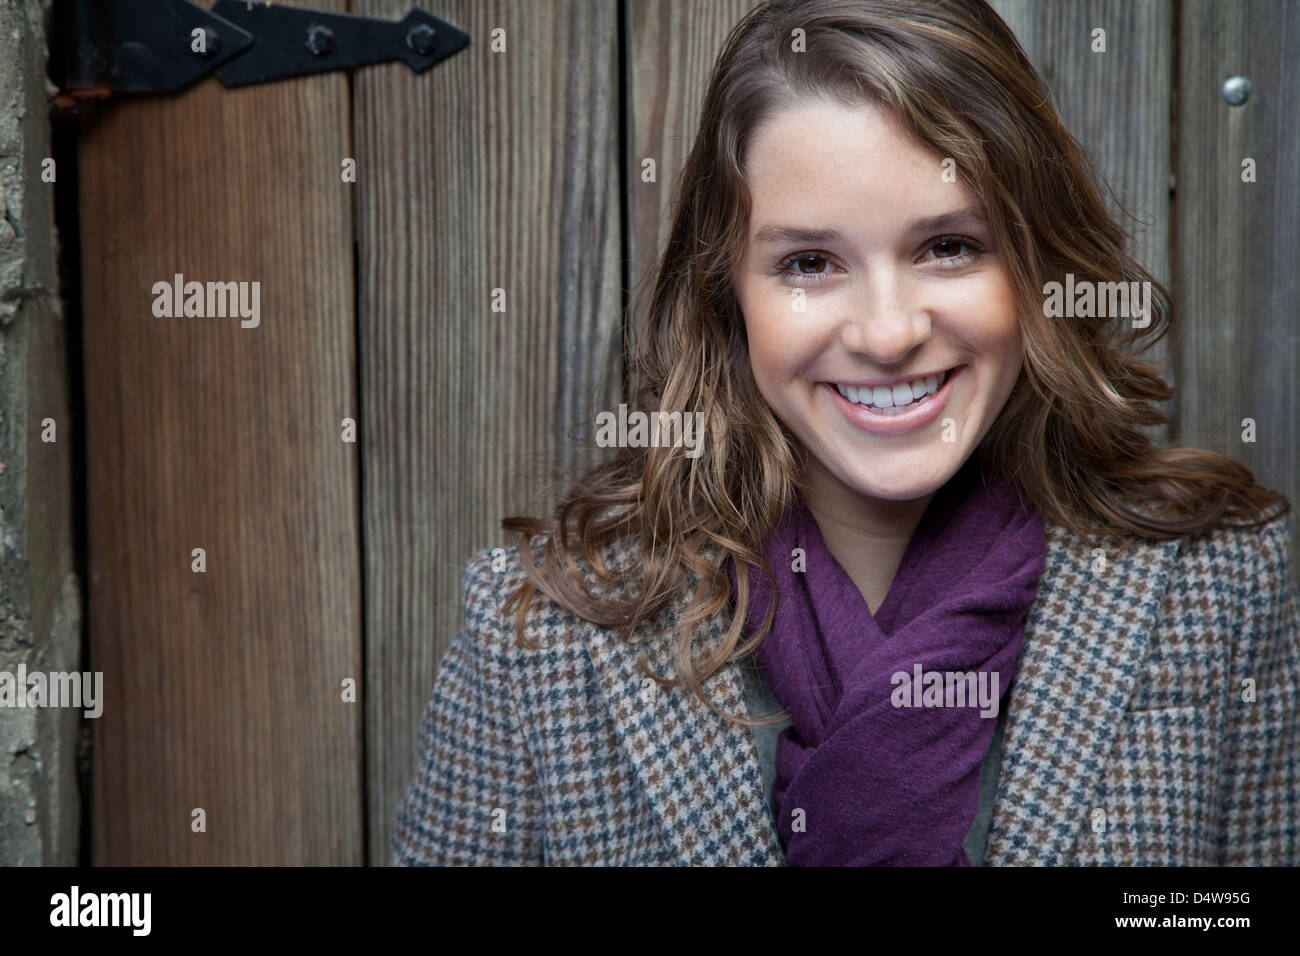 Smiling woman wearing purple scarf Stock Photo